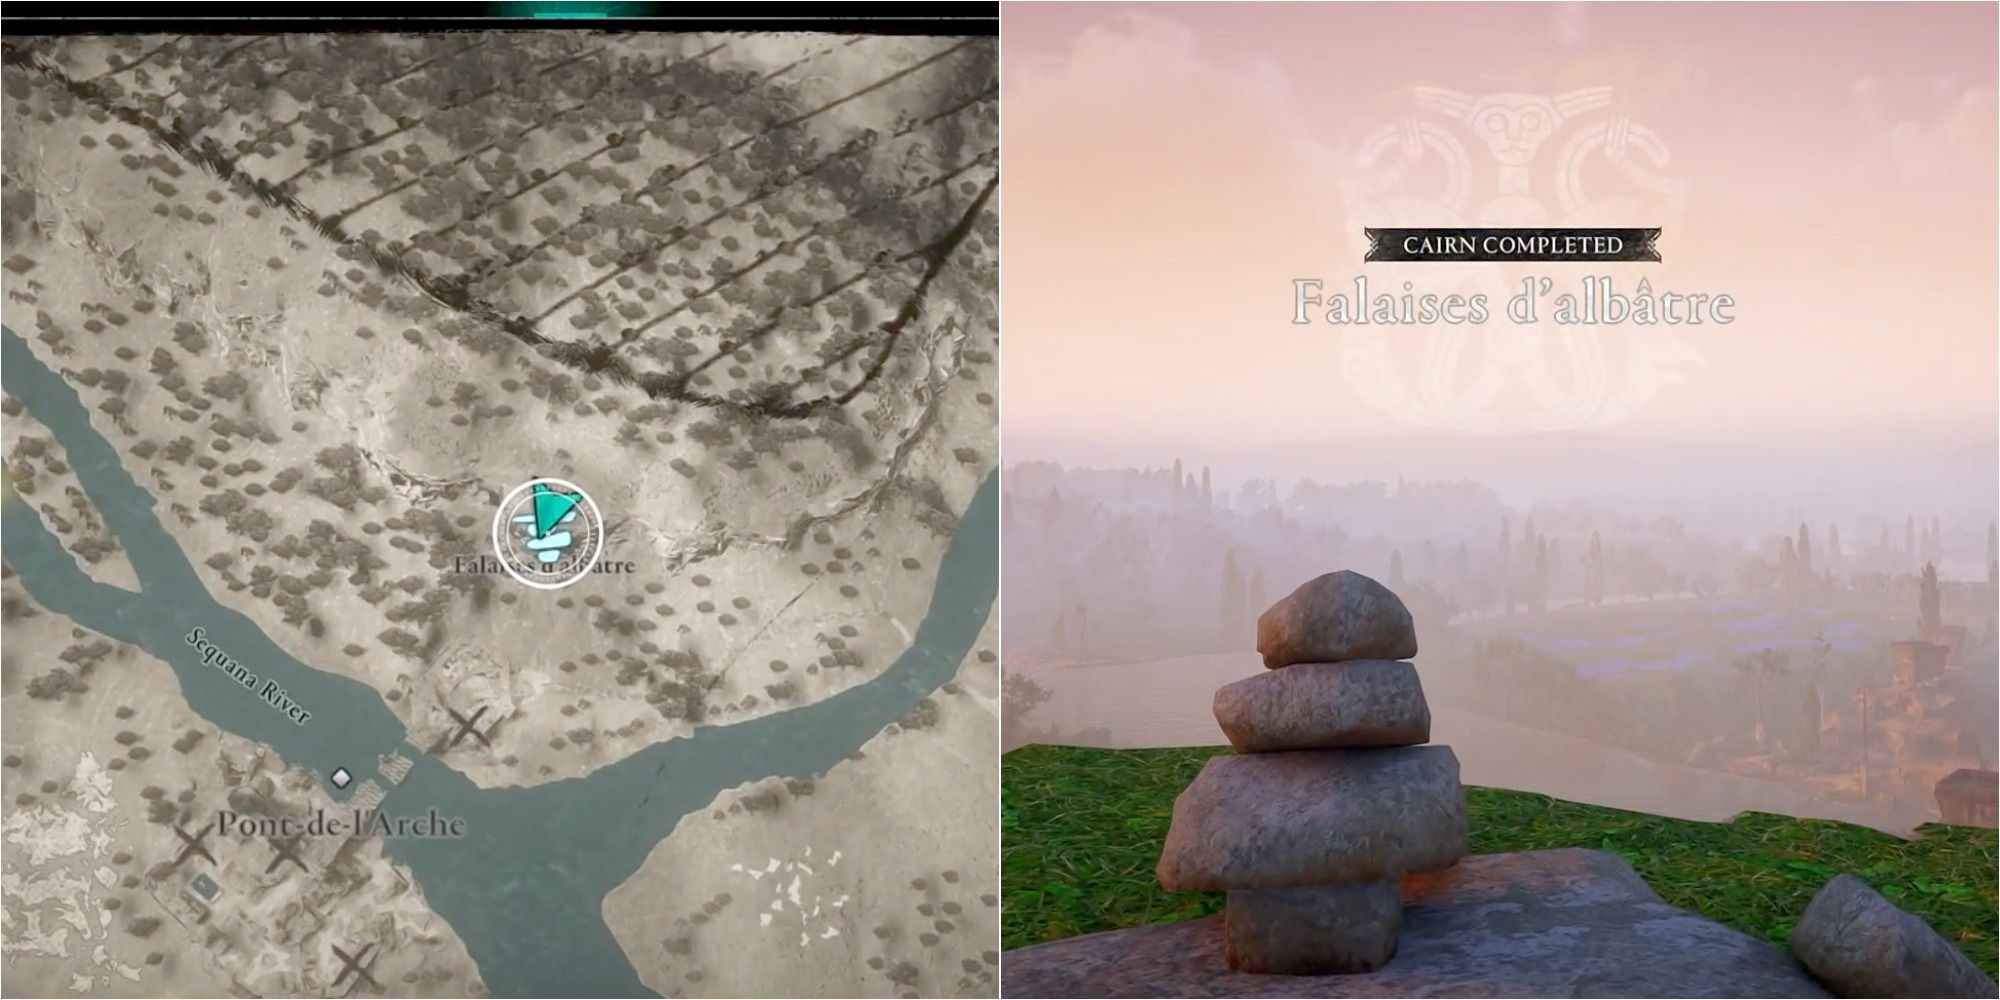 Assassin's Creed Valhalla Split Image Falaises D'albatre Cairn Location